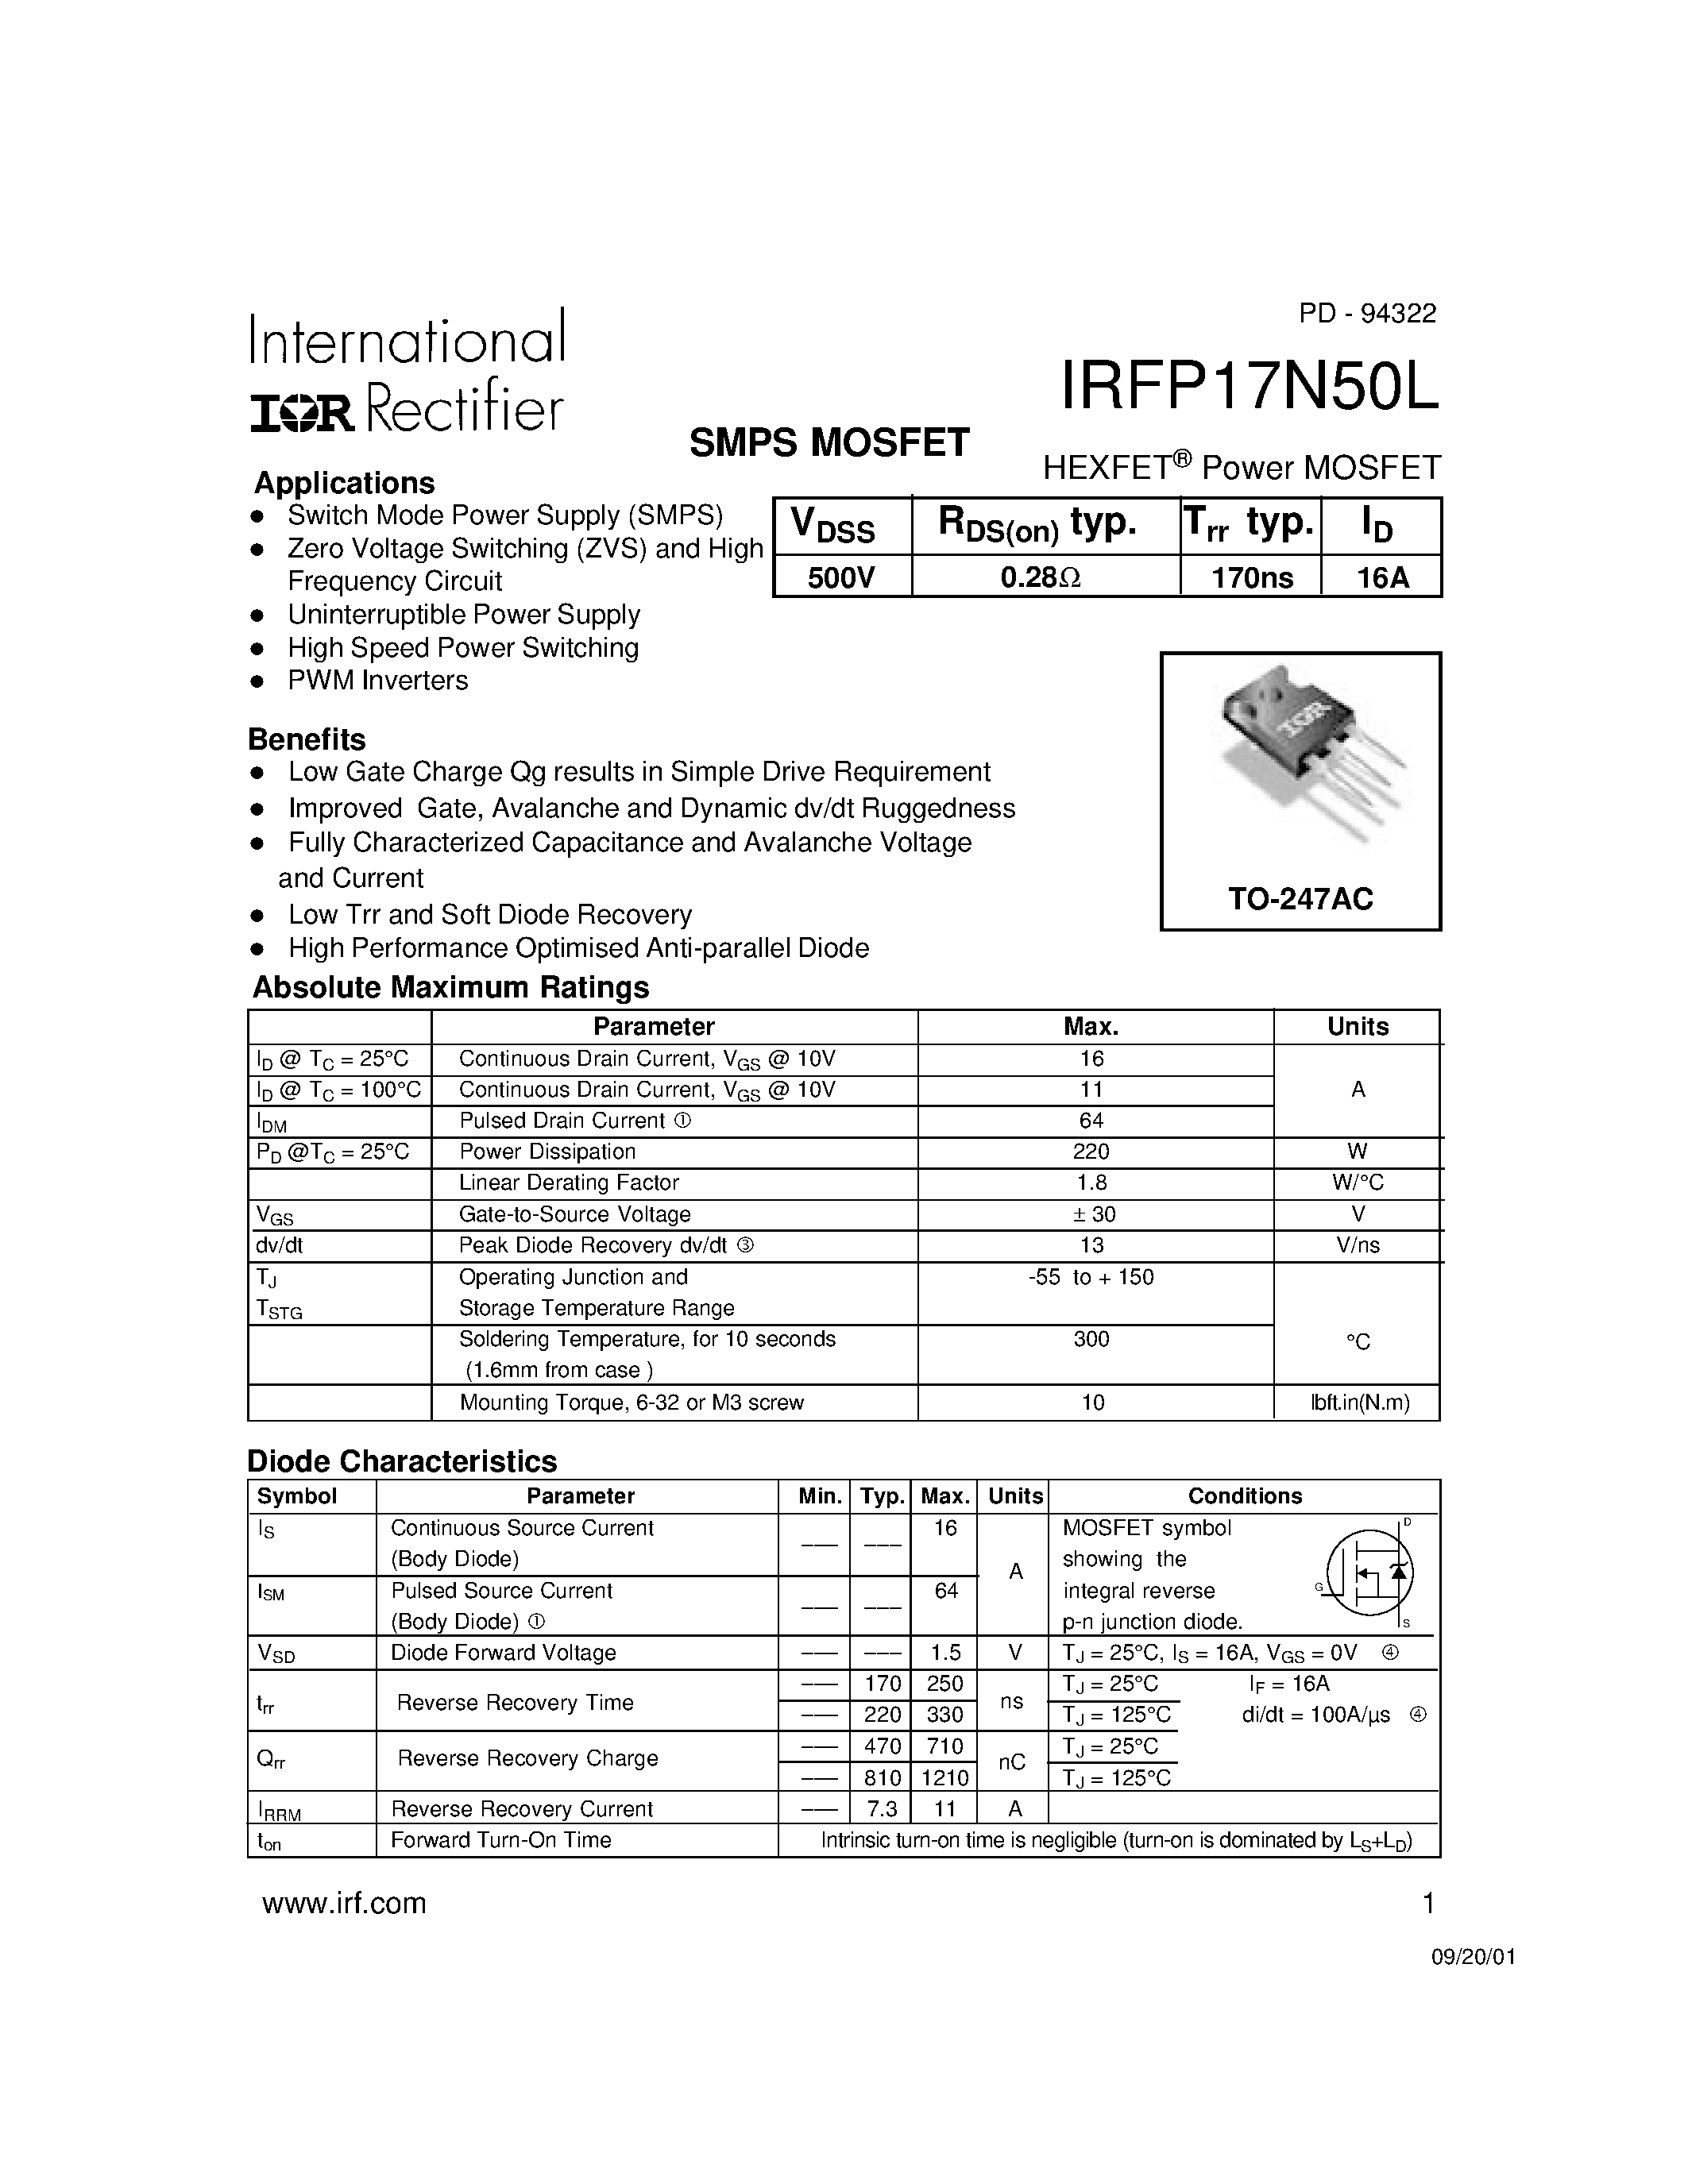 Даташит IRFP17N50L - Power MOSFET страница 1